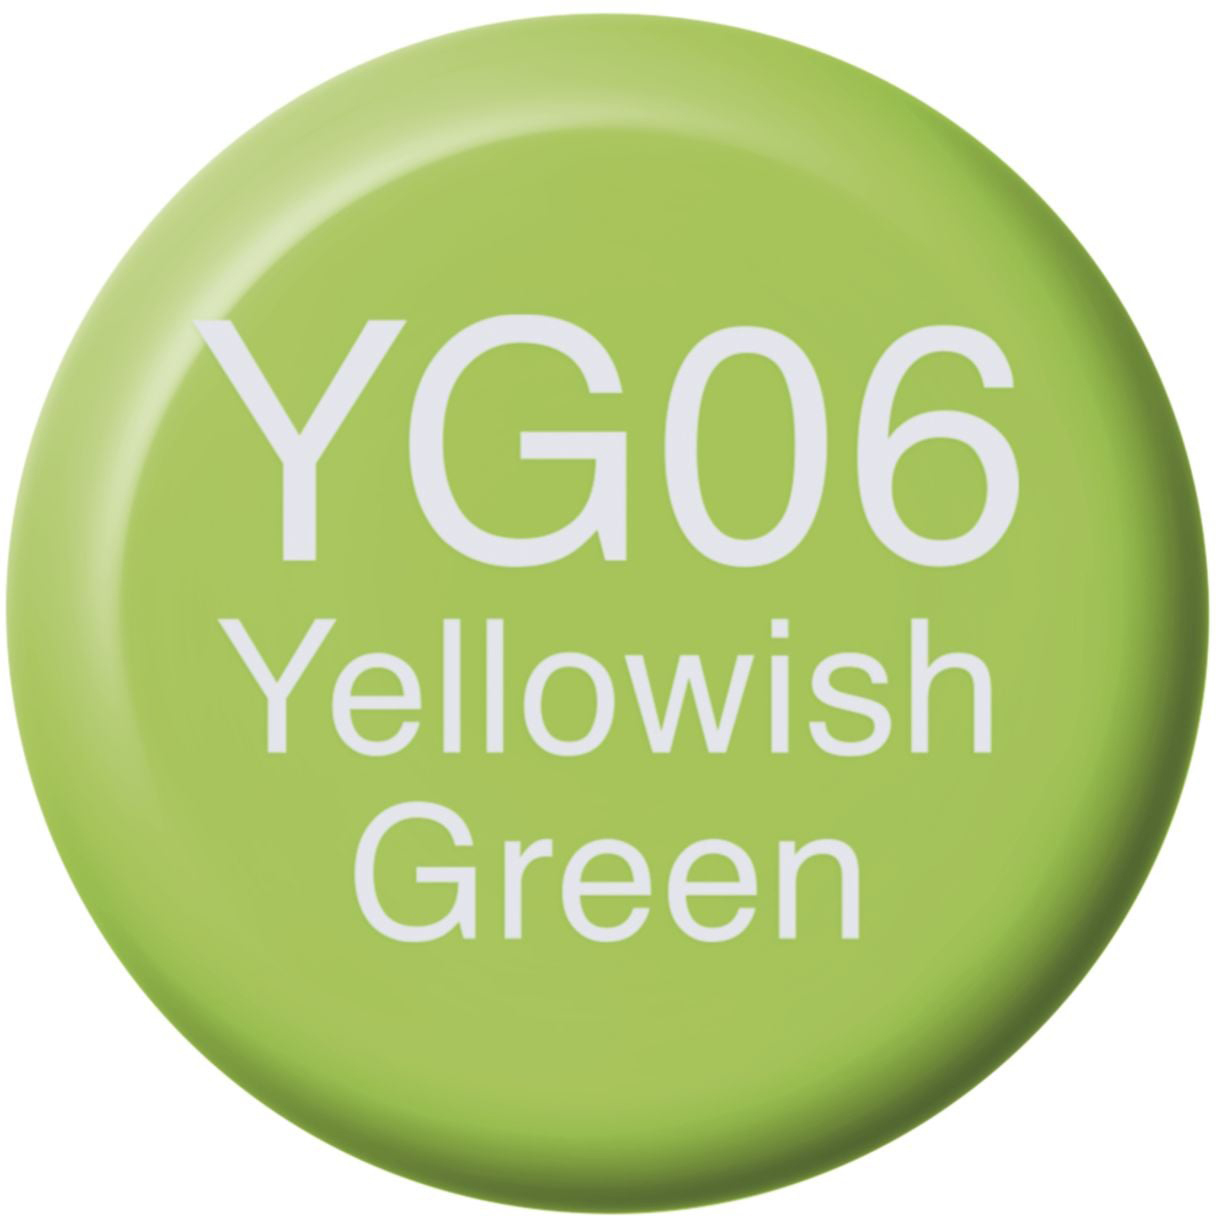 COPIC Ink Refill 21076273 YG06 - Yellowish Green YG06 - Yellowish Green